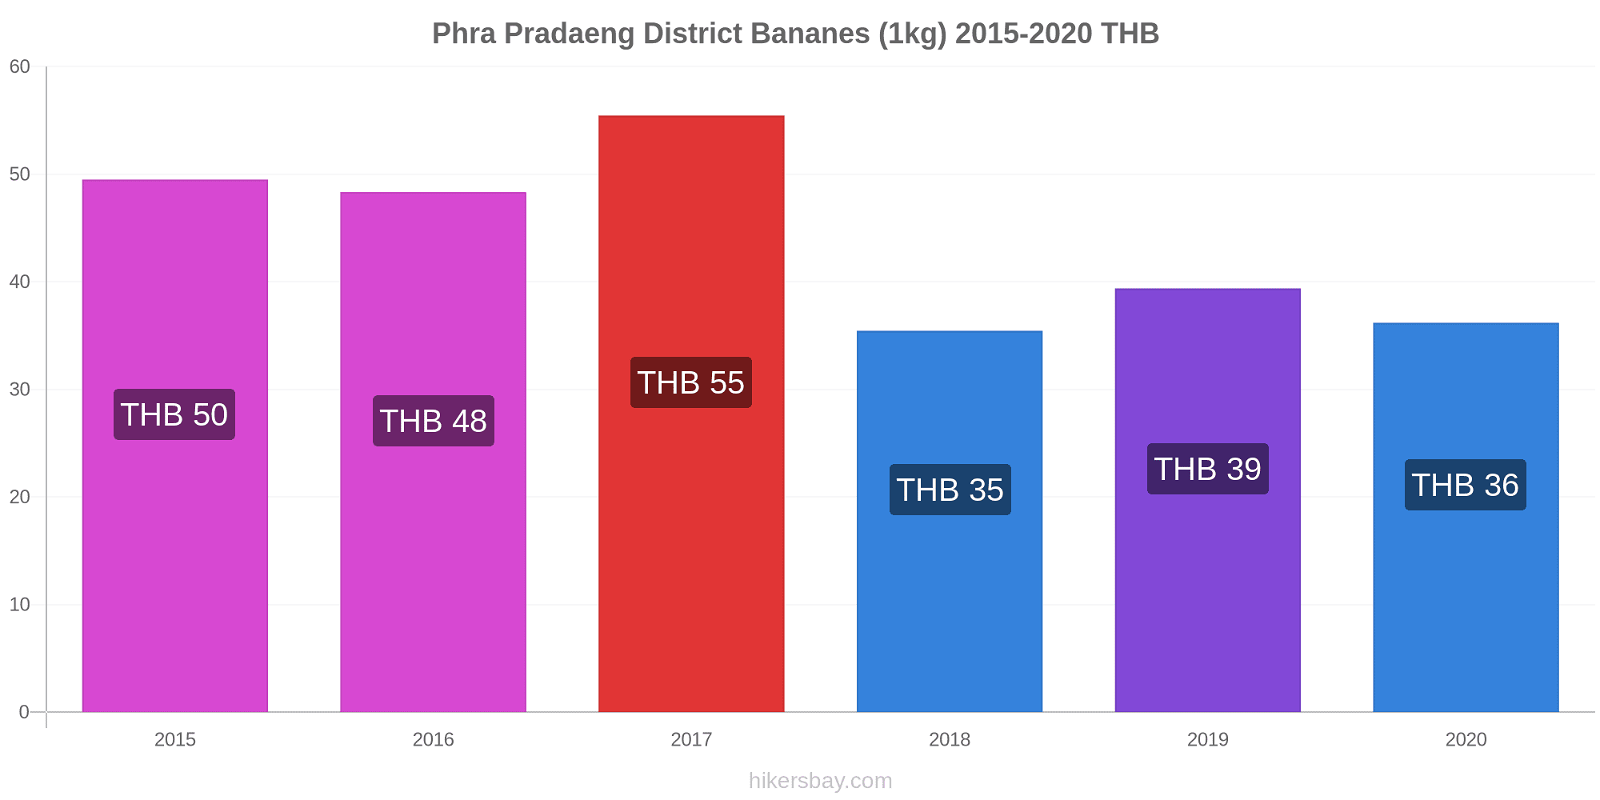 Phra Pradaeng District changements de prix Bananes (1kg) hikersbay.com